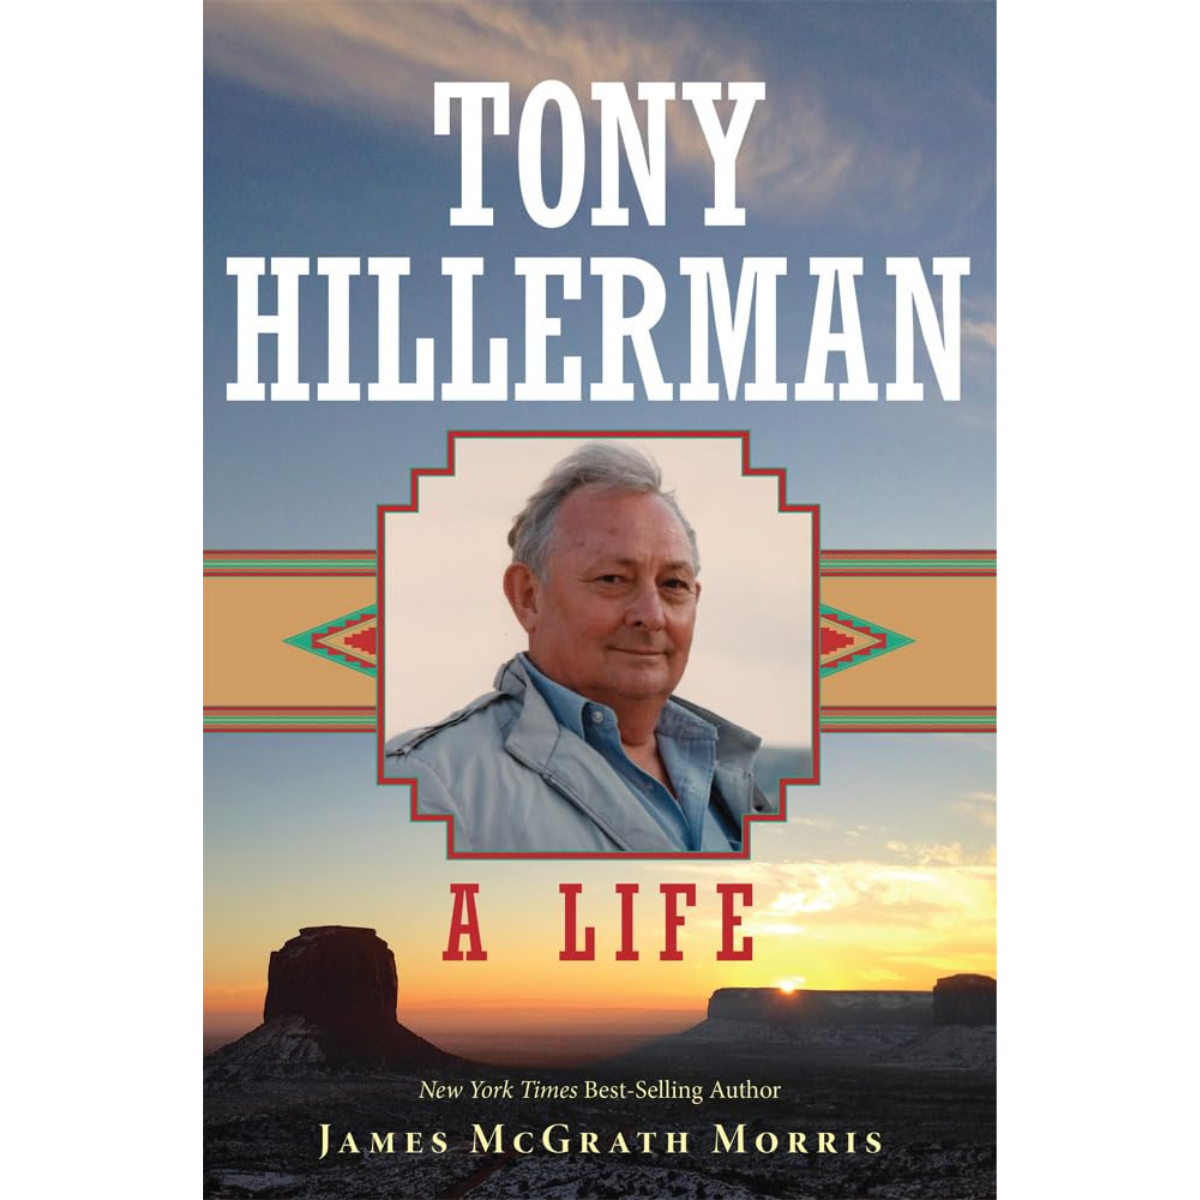 Tony Hillerman: A Life